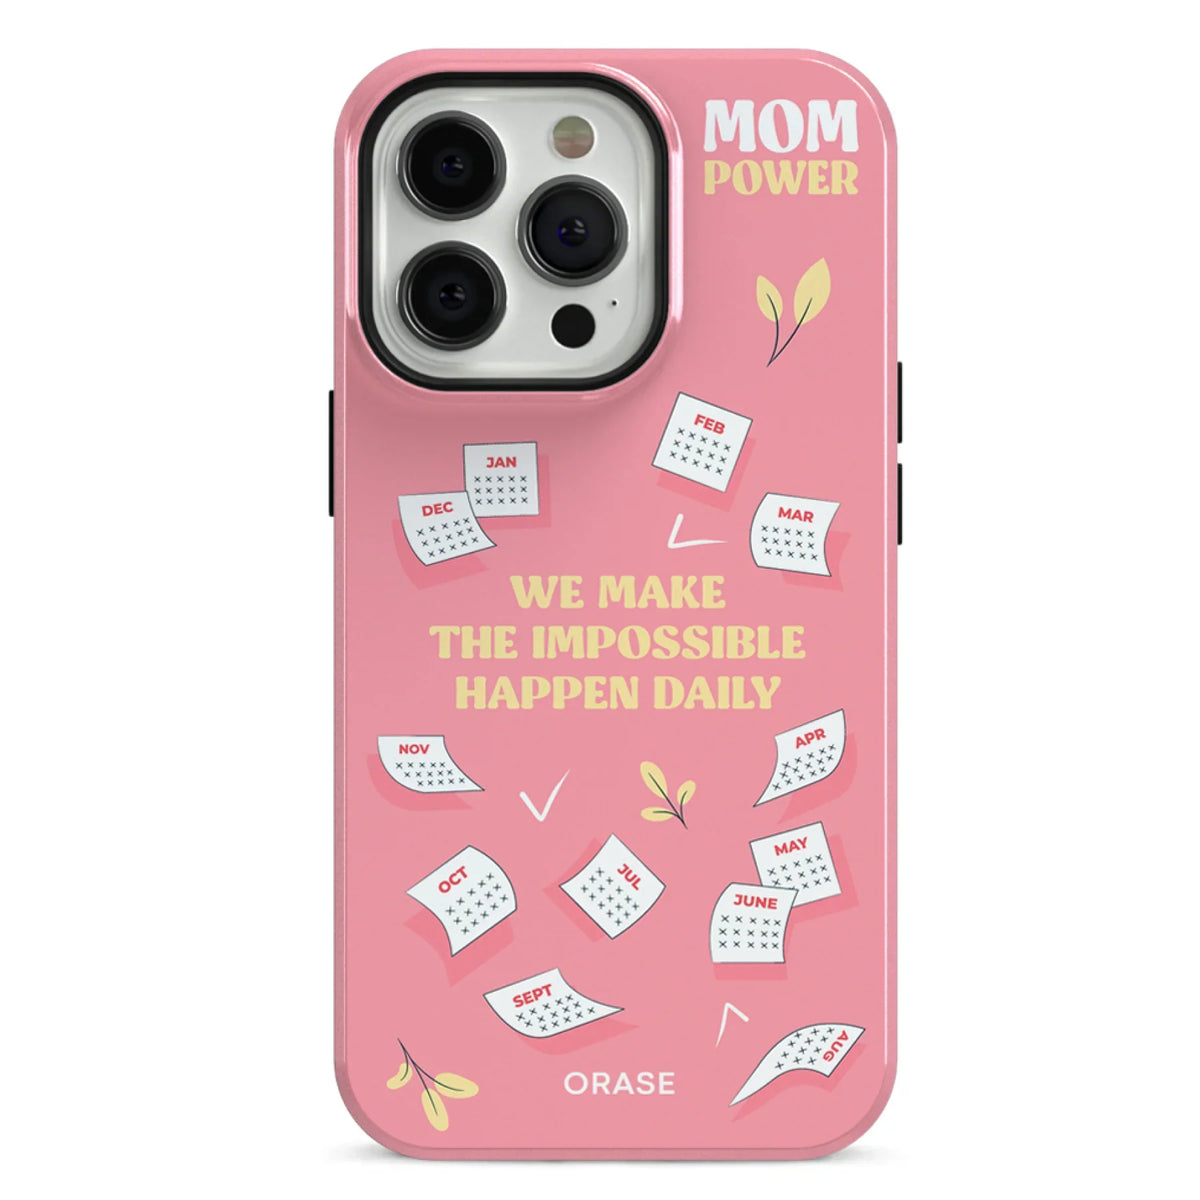 Mom Power iPhone Case - iPhone 12 Pro